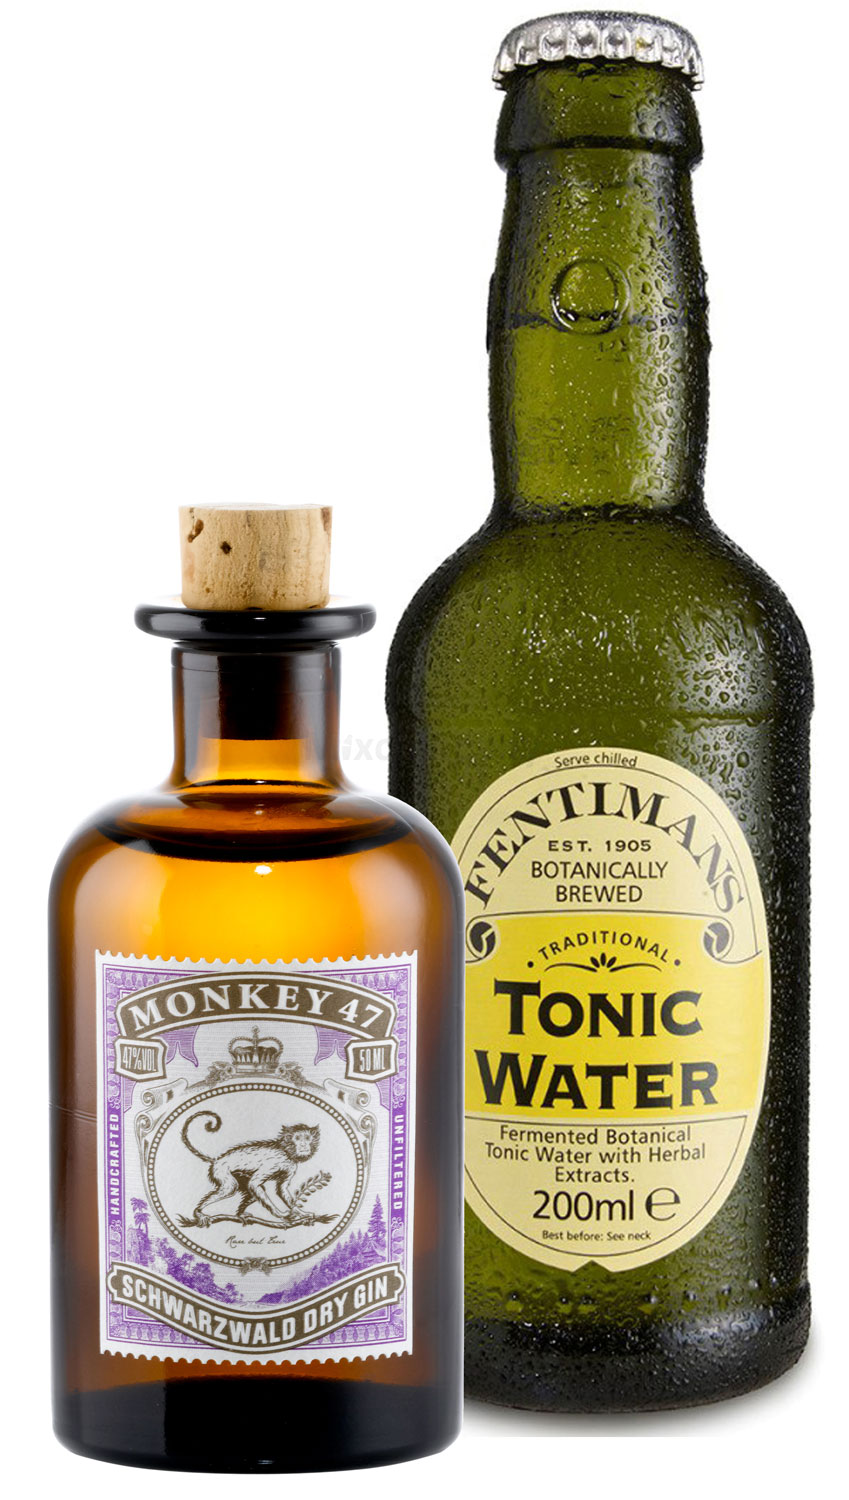 Gin Tonic Probierset - Monkey 47 Schwarzwald Dry Gin 50ml (47% Vol) + Fentimans Tonic Water 200ml inkl. Pfand MEHRWEG